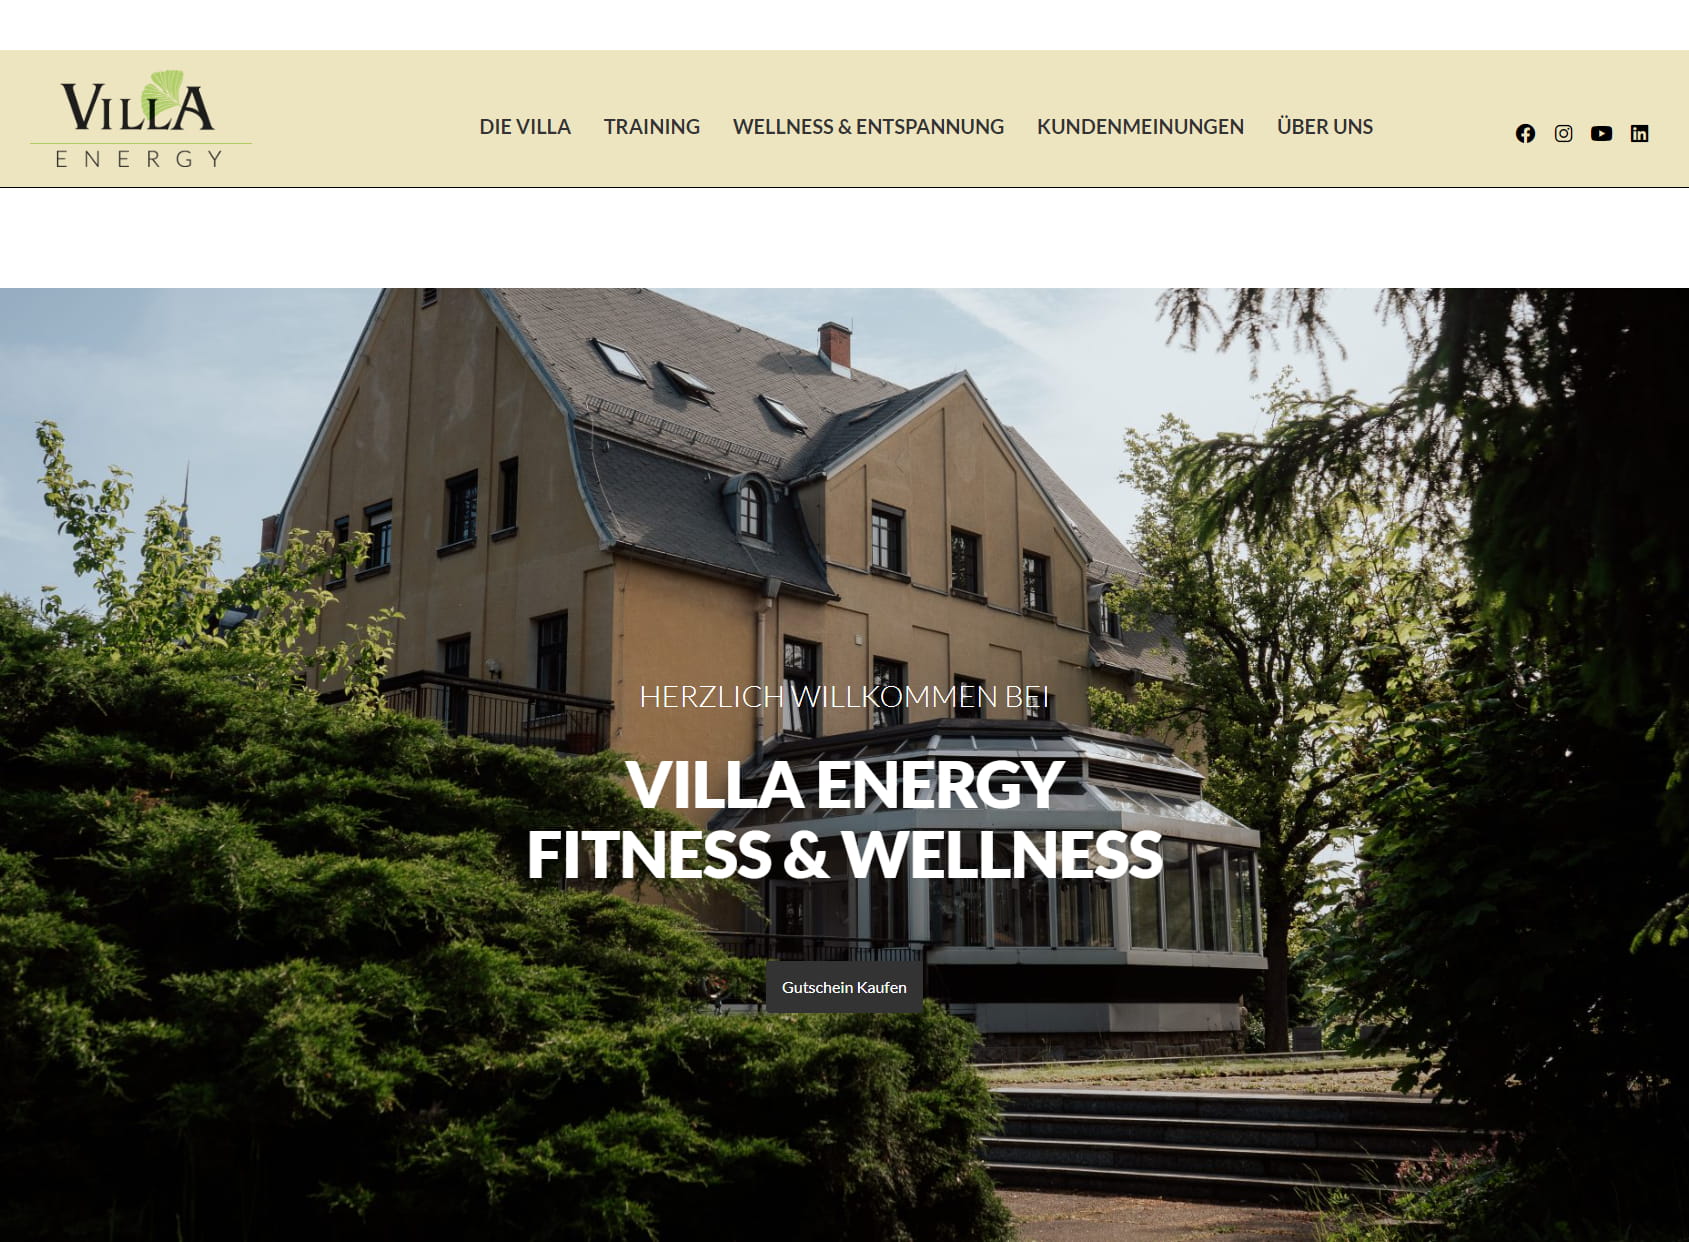 Villa - Energy